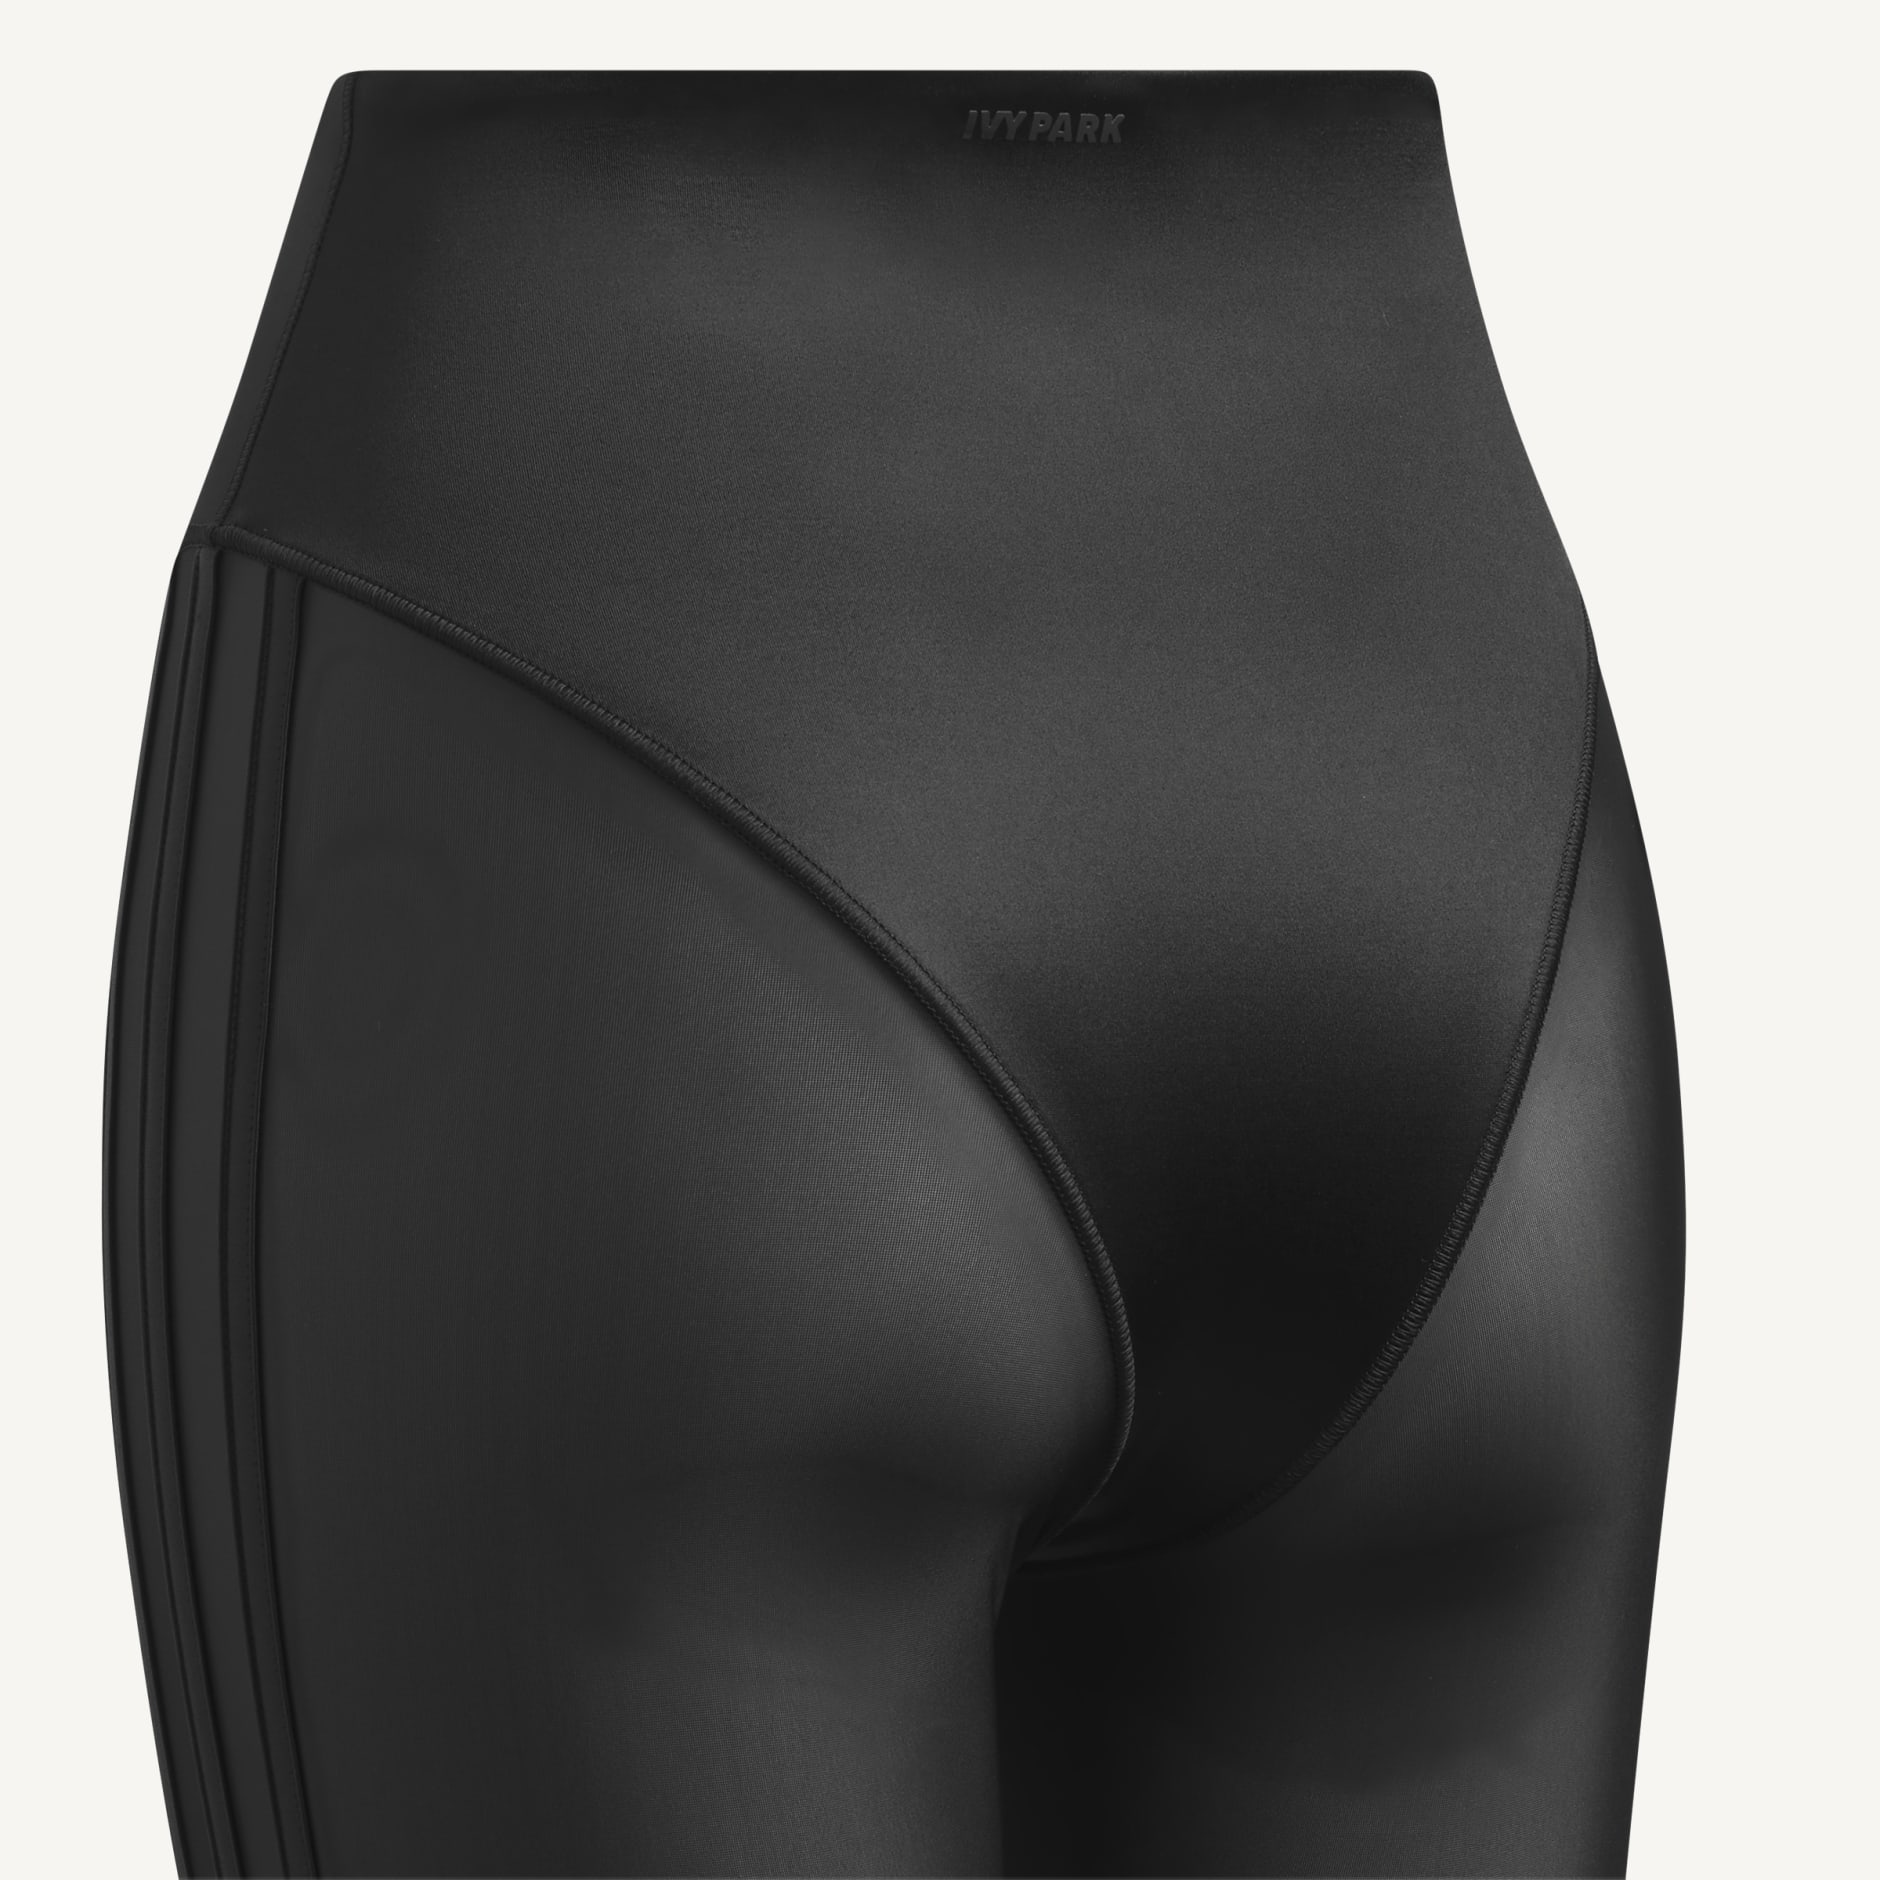 Women's Clothing - IVY PARK Shiny Panty Mesh Tights - Black